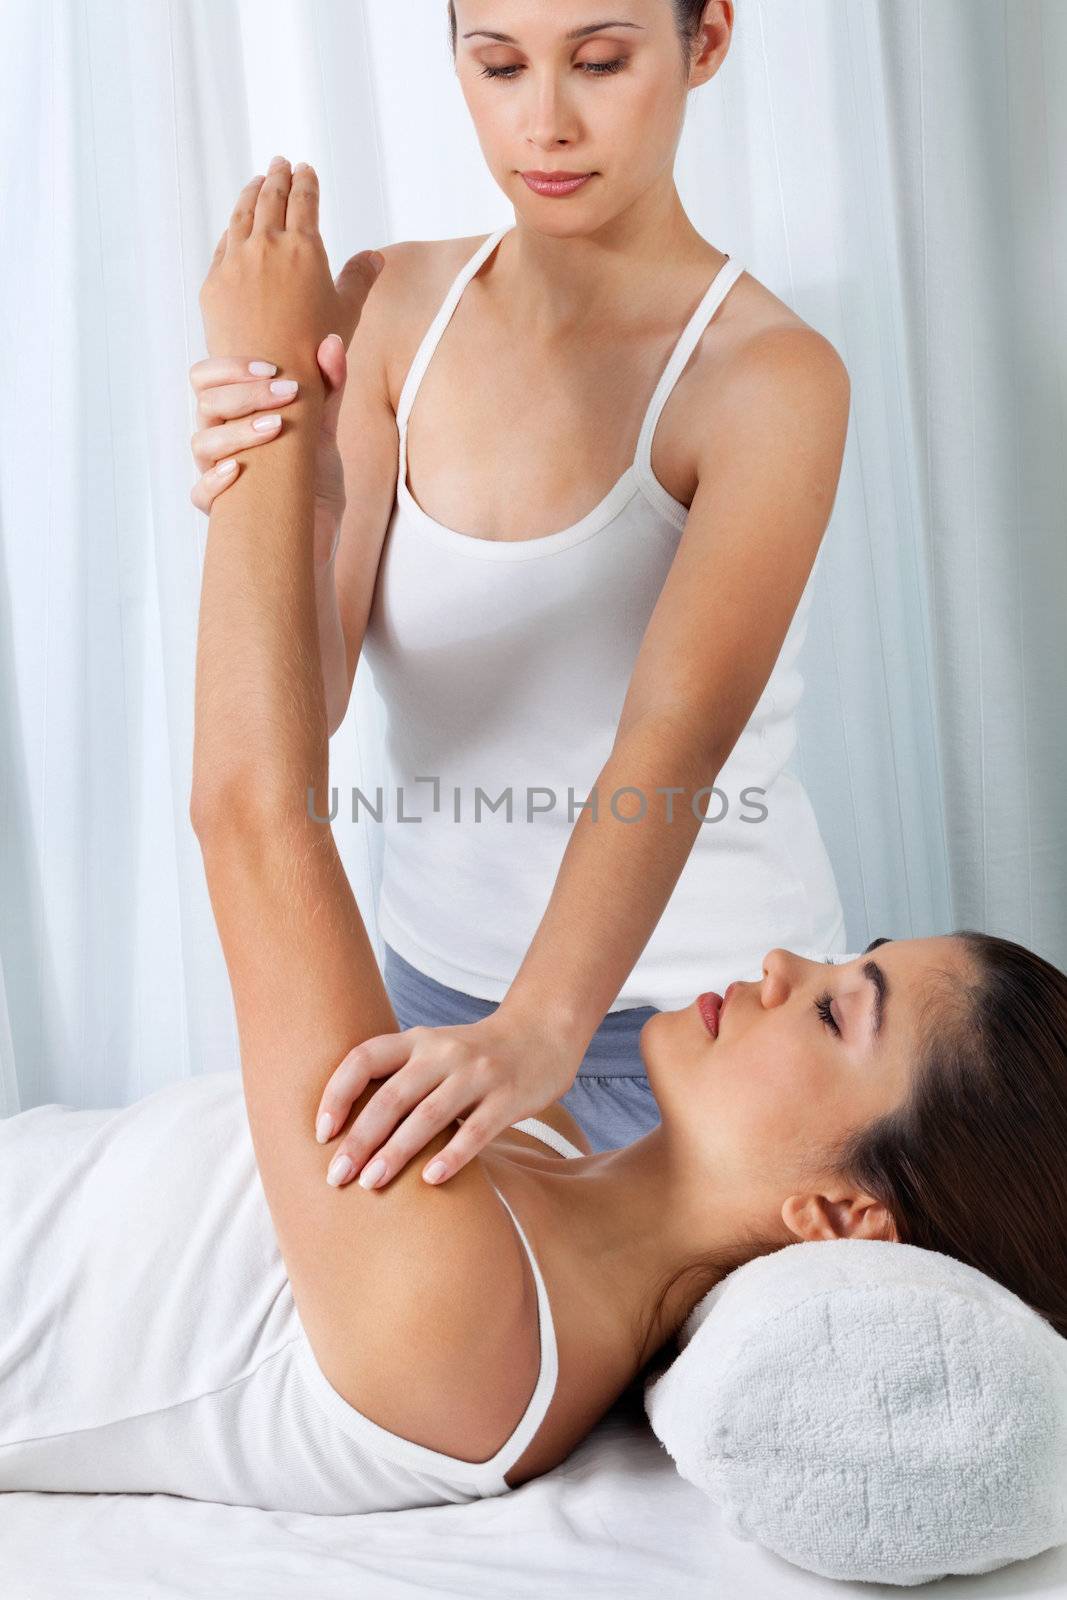 Woman Having An Arm Massage by leaf